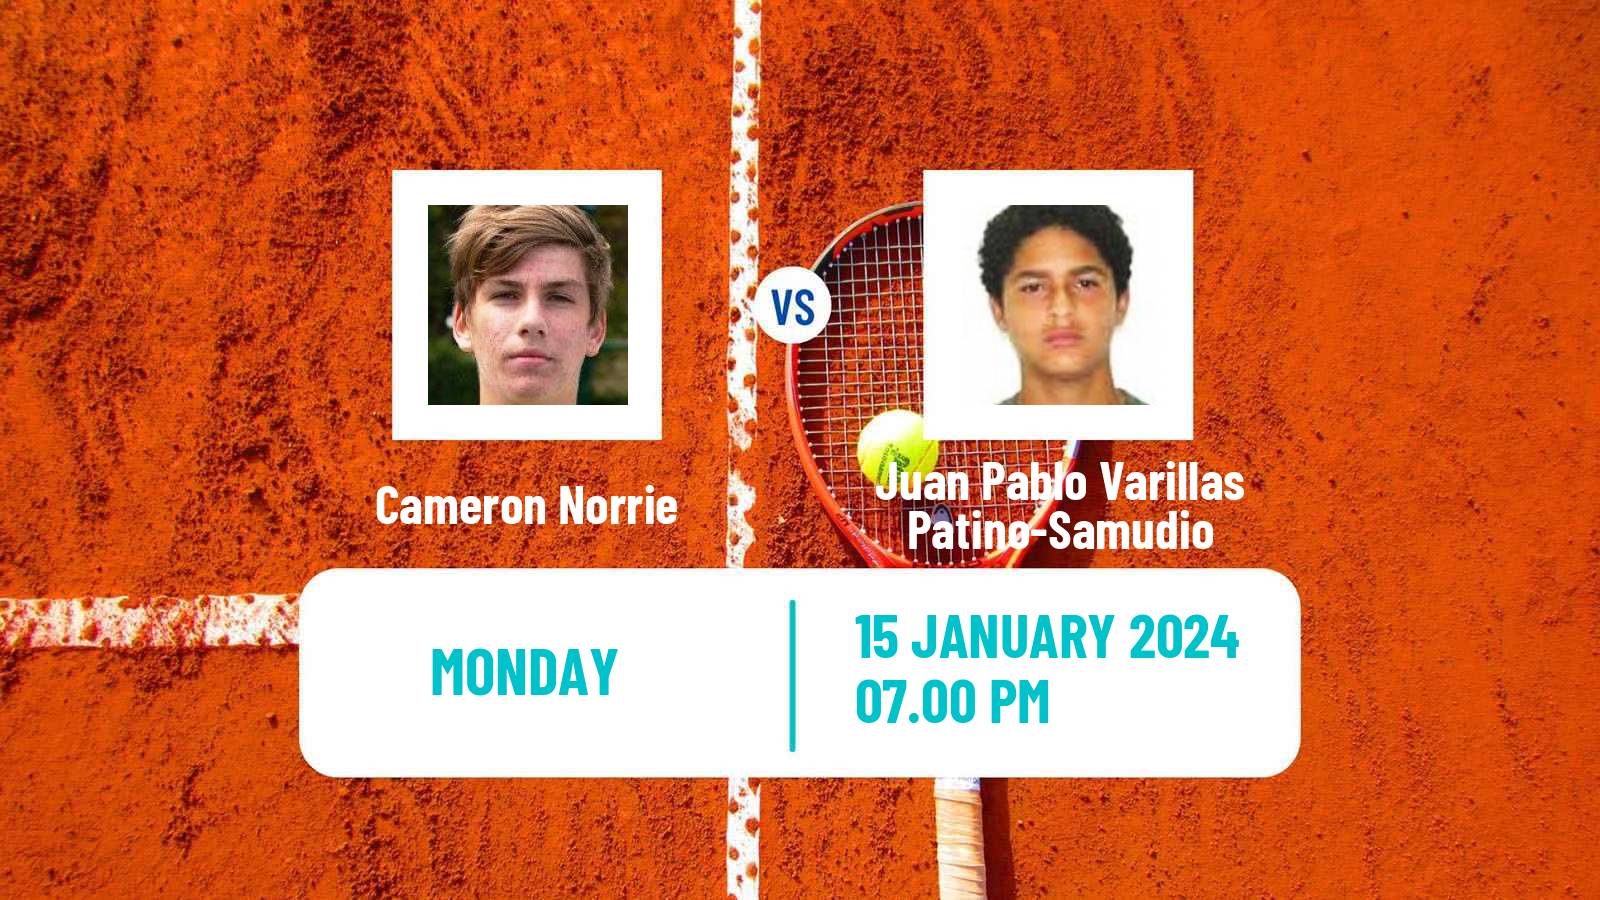 Tennis ATP Australian Open Cameron Norrie - Juan Pablo Varillas Patino-Samudio